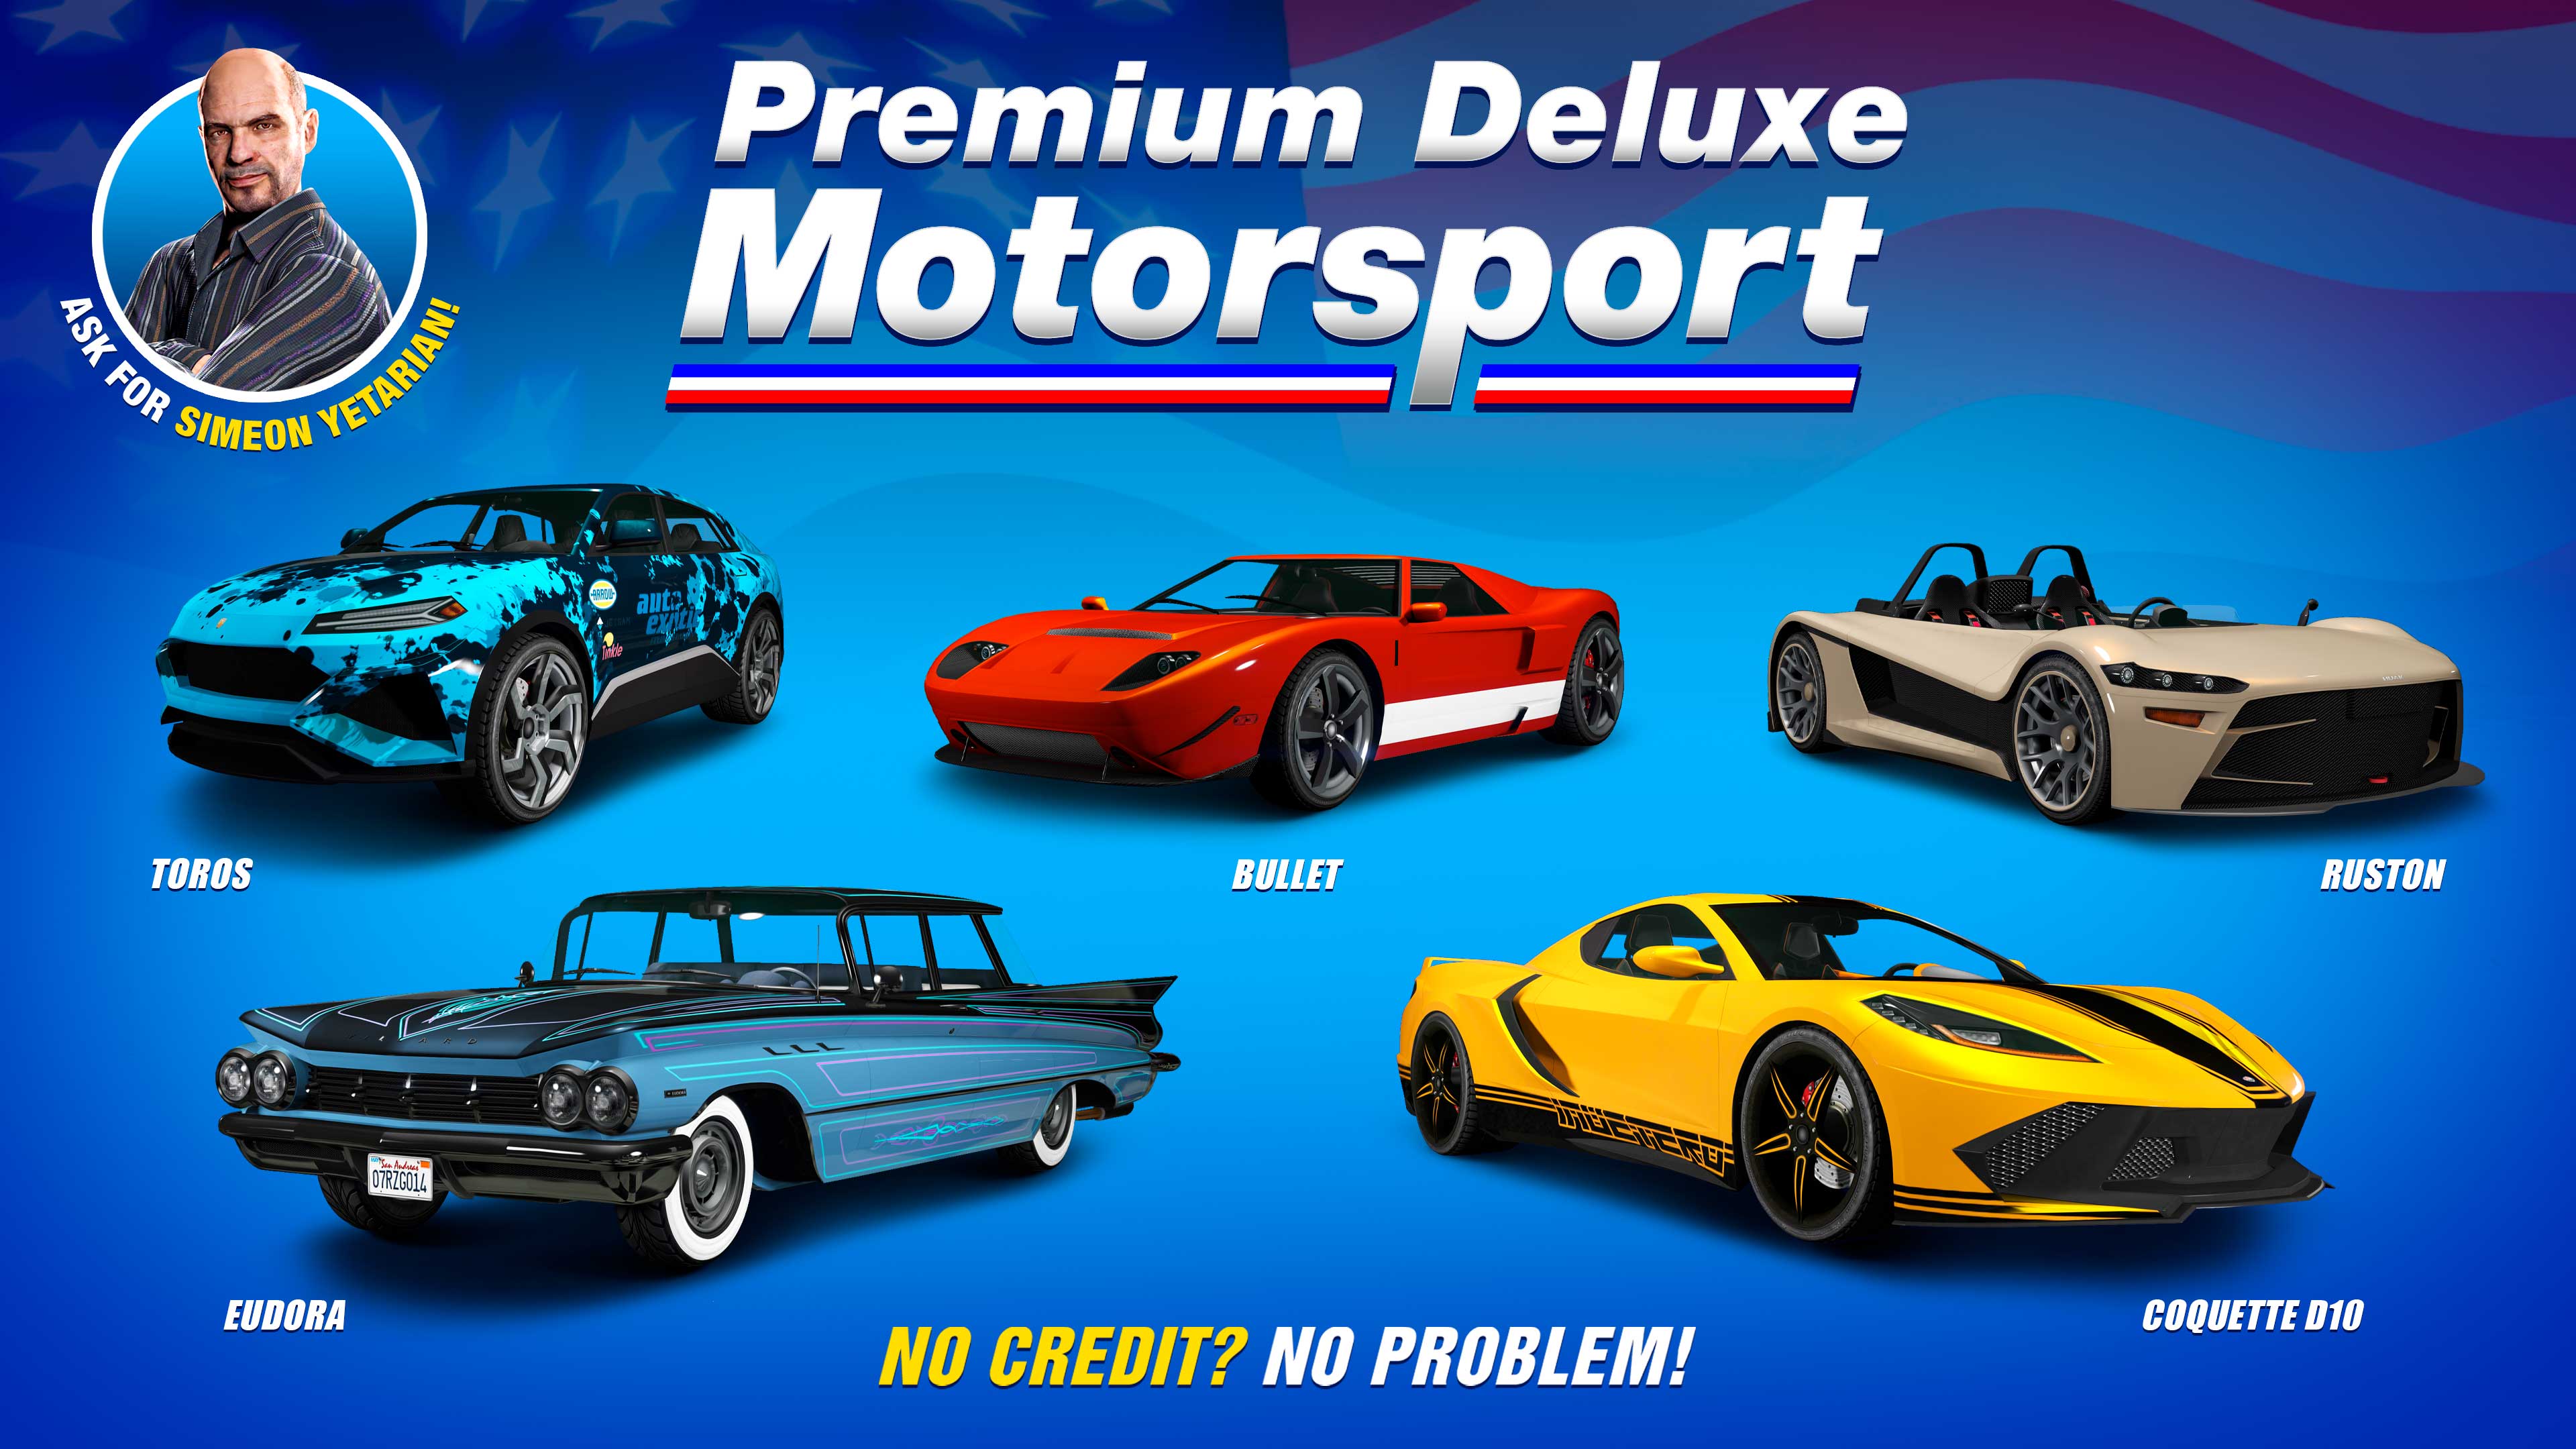 Grafika przedstawiająca salon Premium Deluxe Motorsport